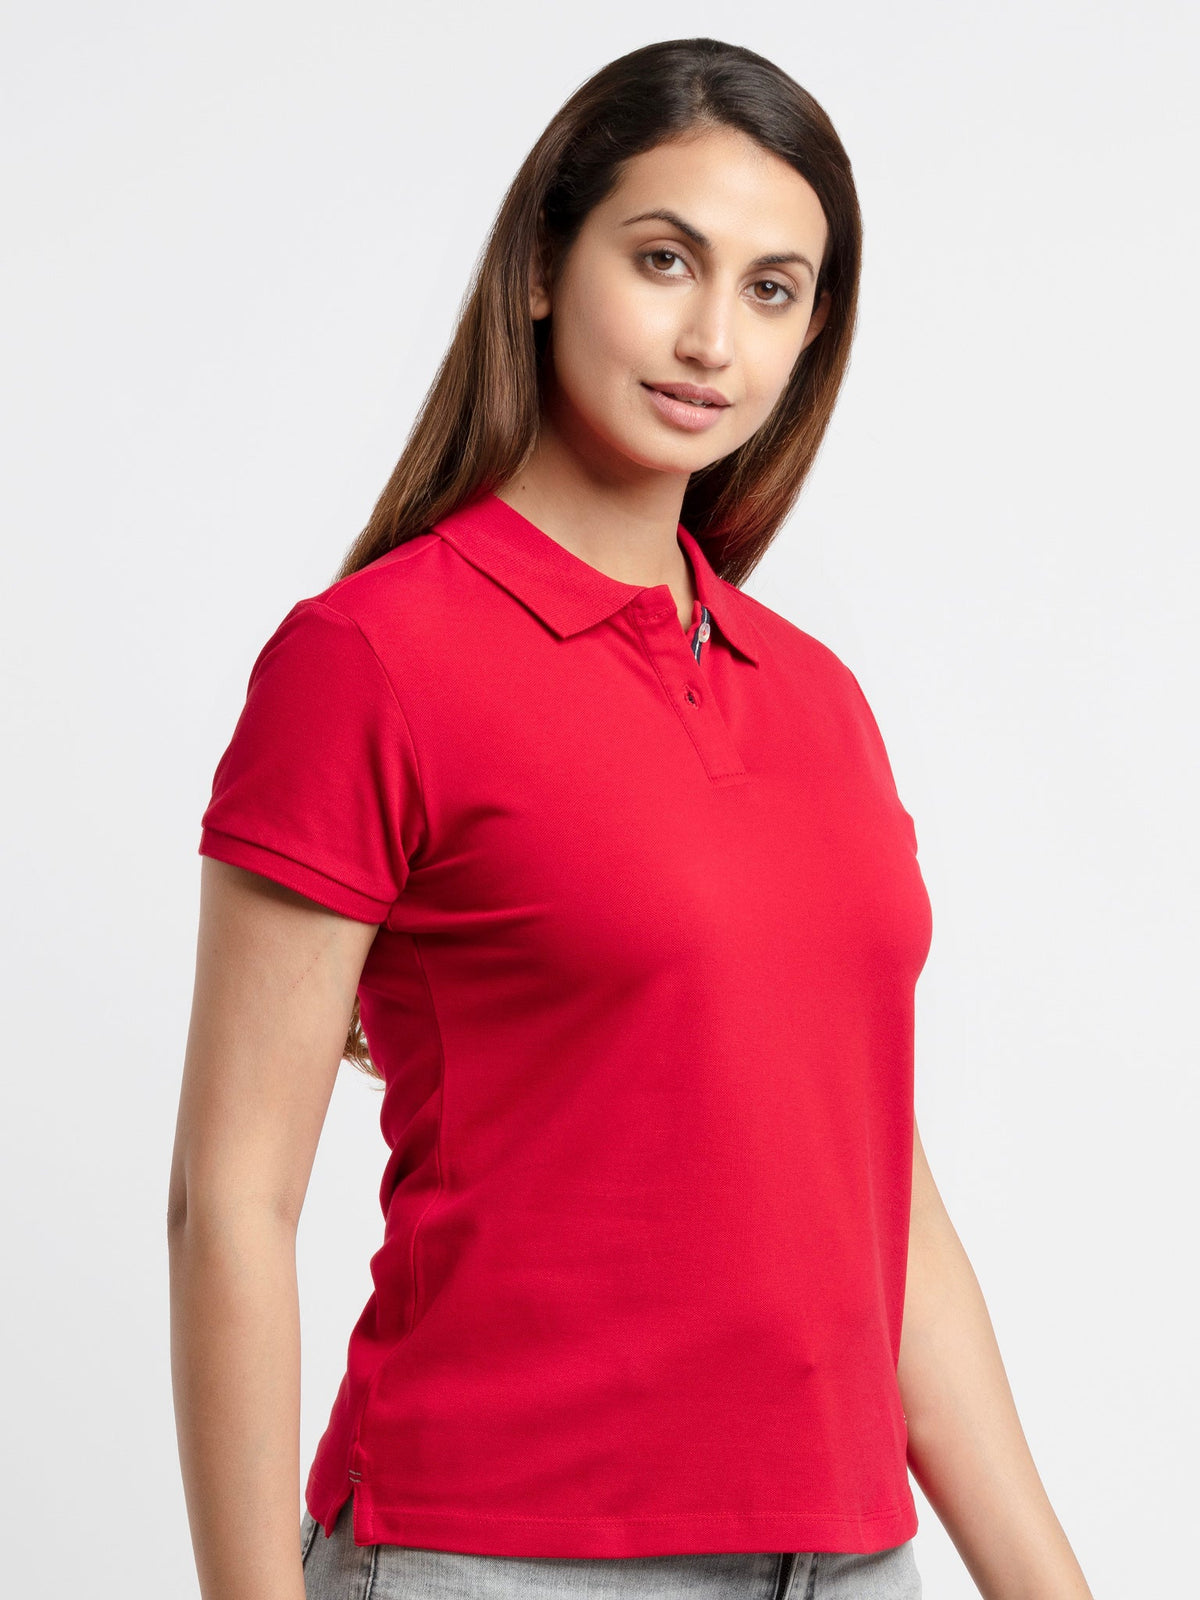 Women's Basic Polo T-Shirt